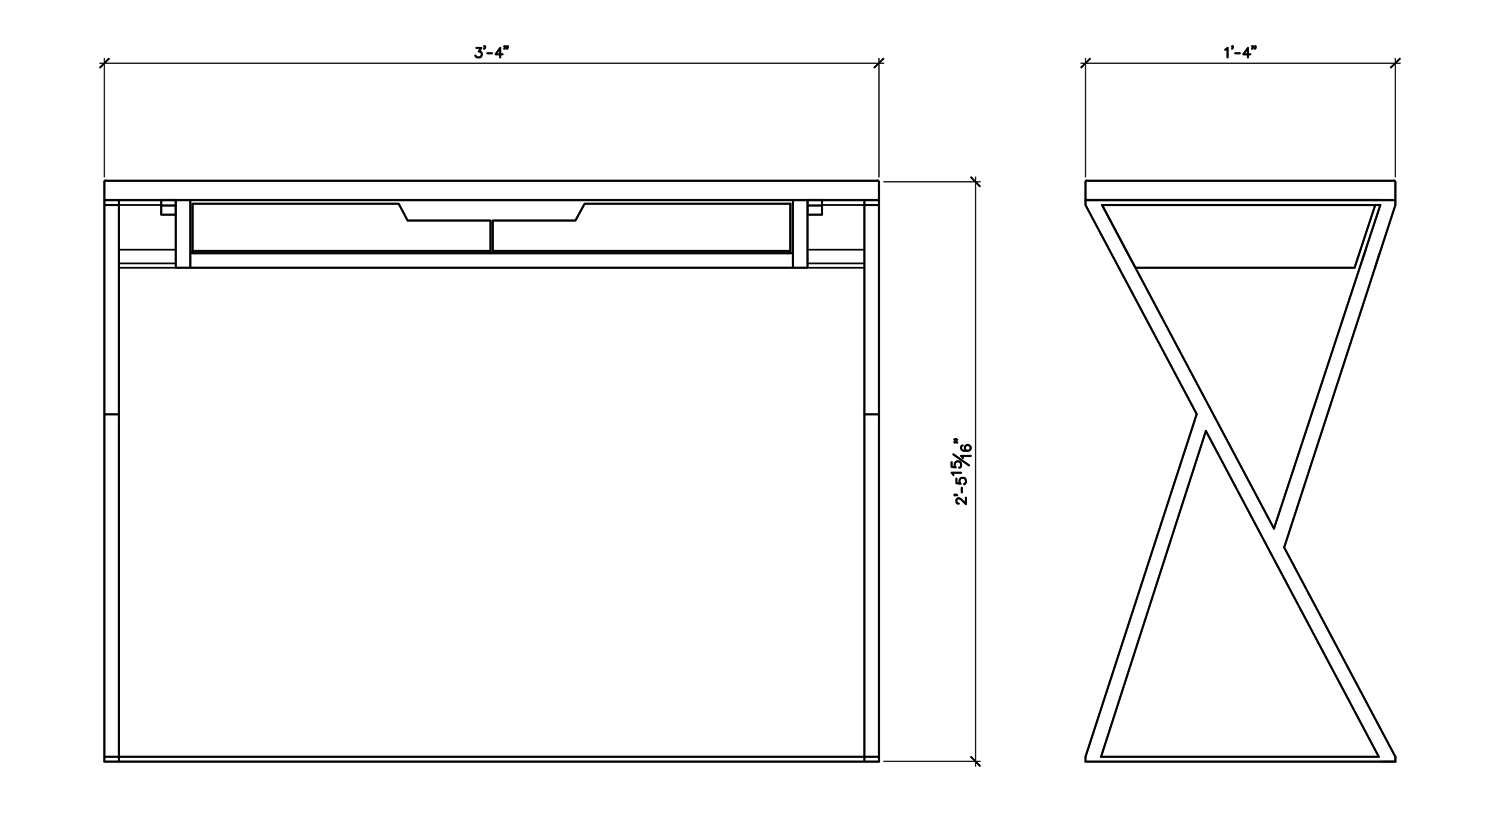 Yk desk dimensions- By Cristian Arostegui for Arostegui Studio